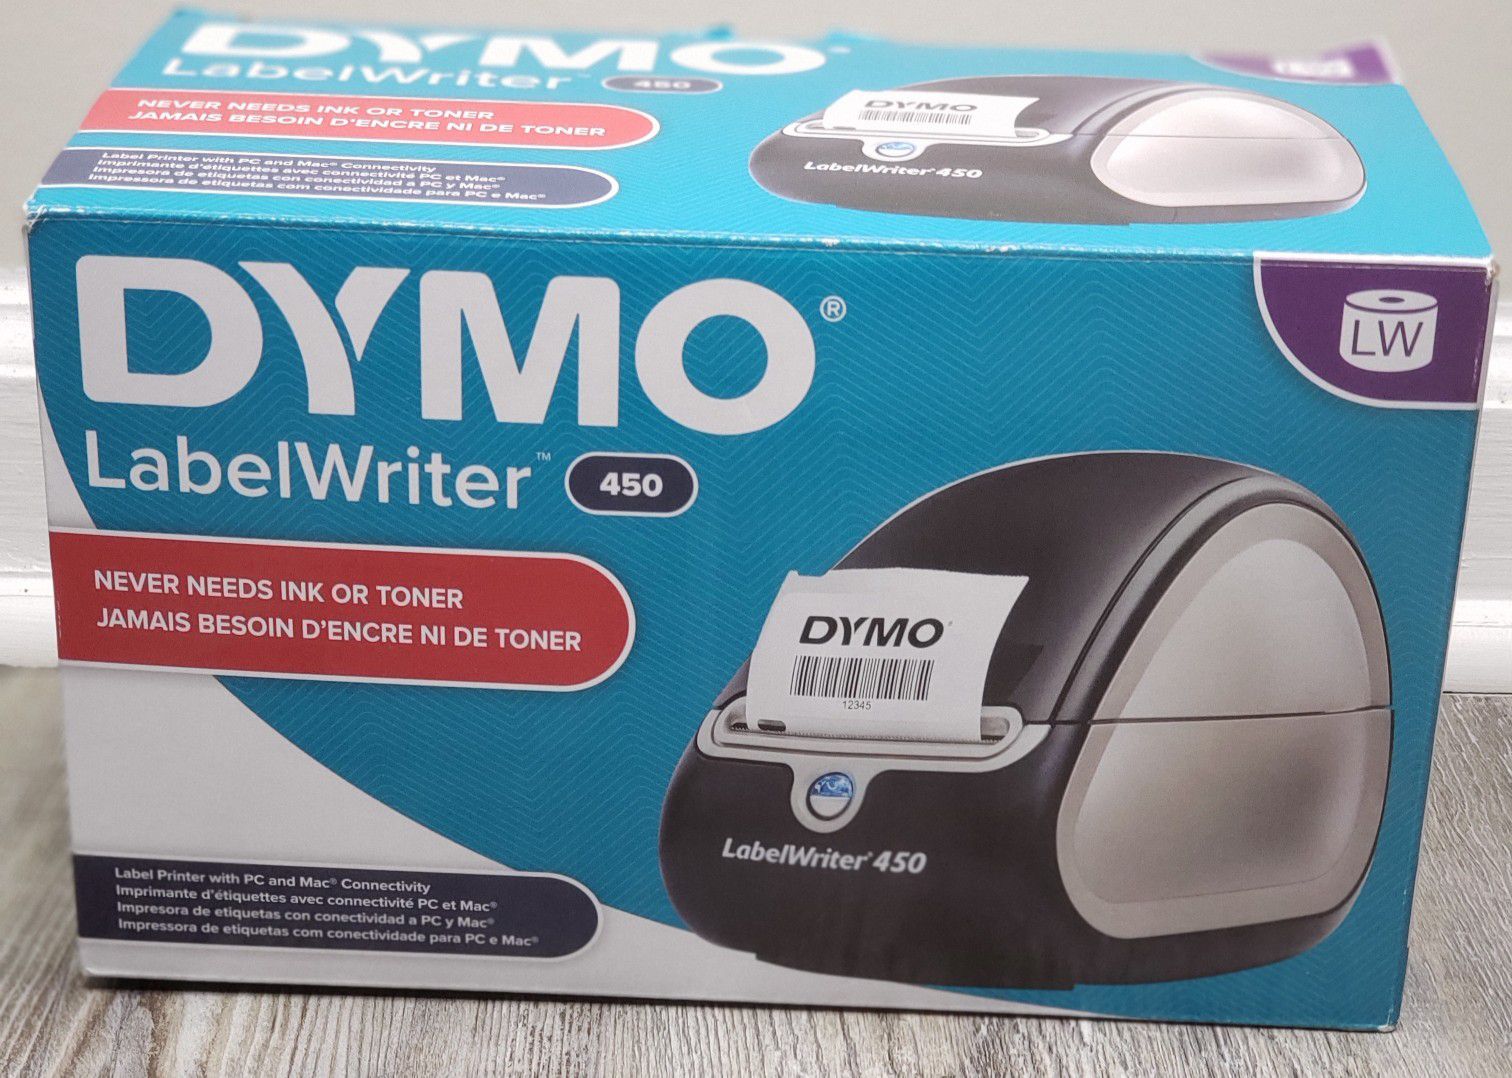 Dymo Labelwriter 450